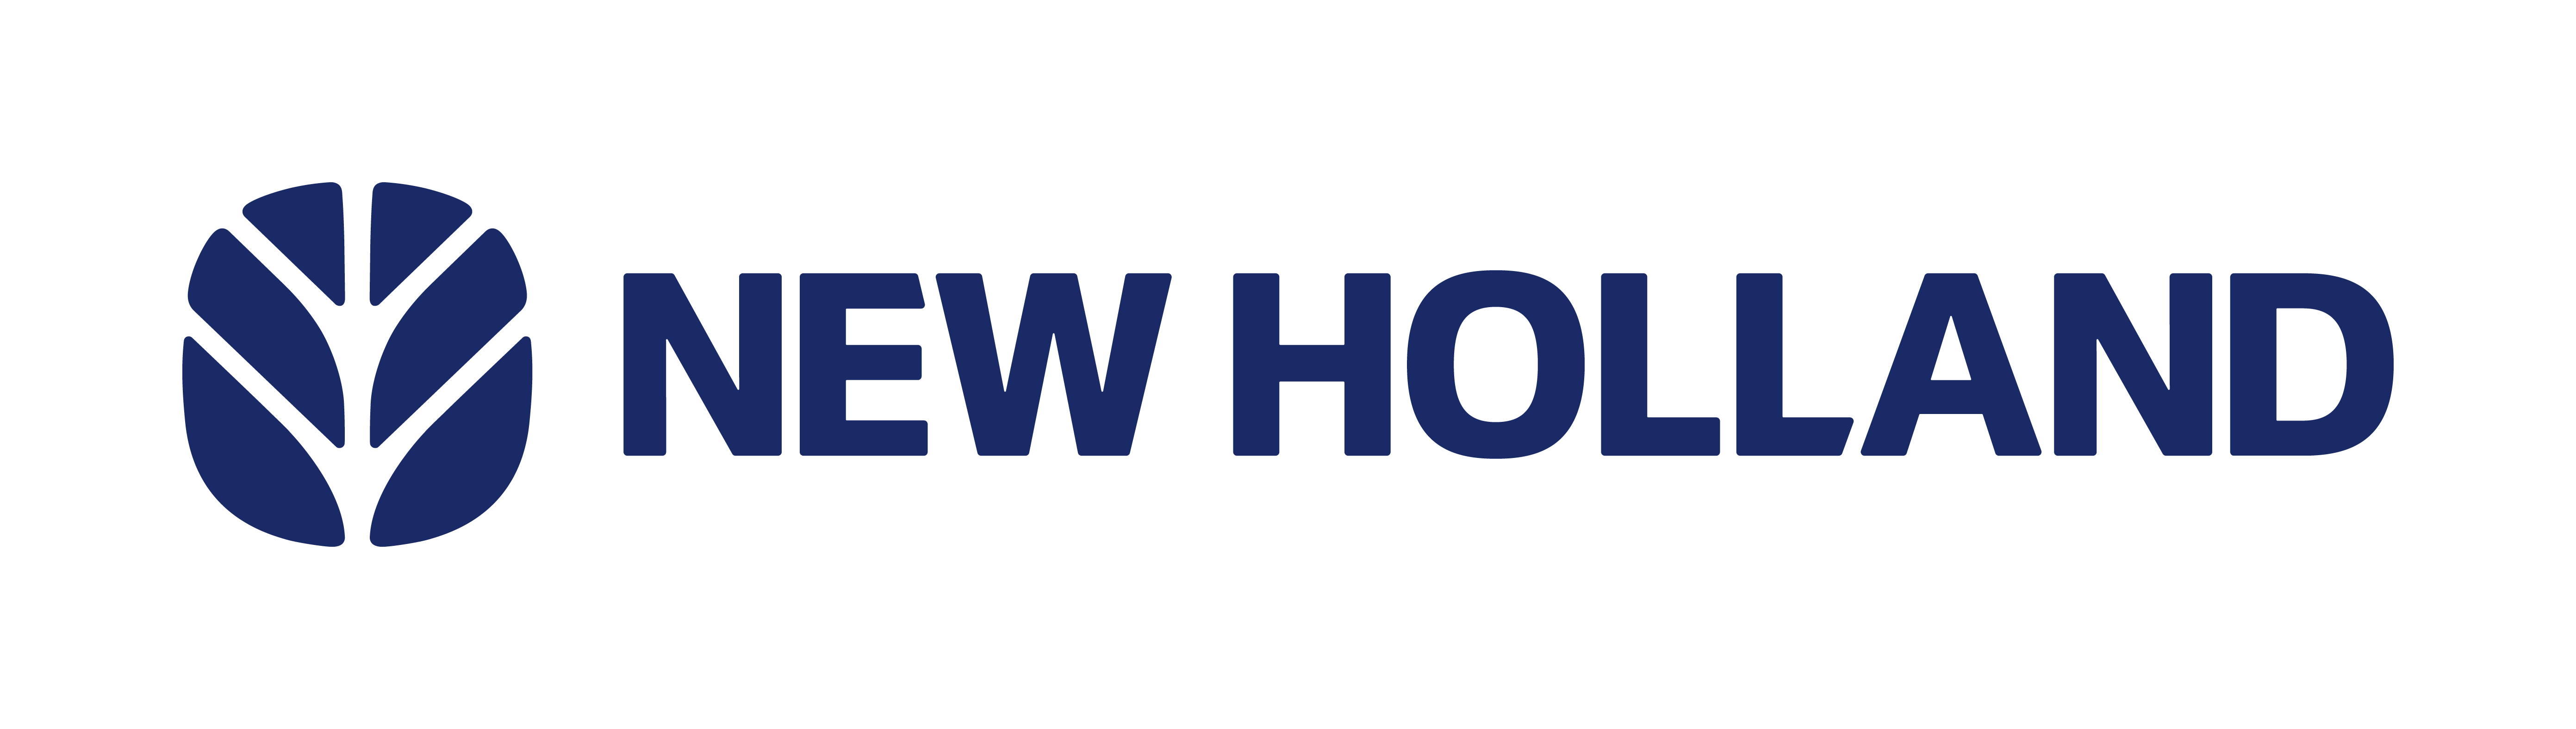 New Holland Primary Logo CMYK